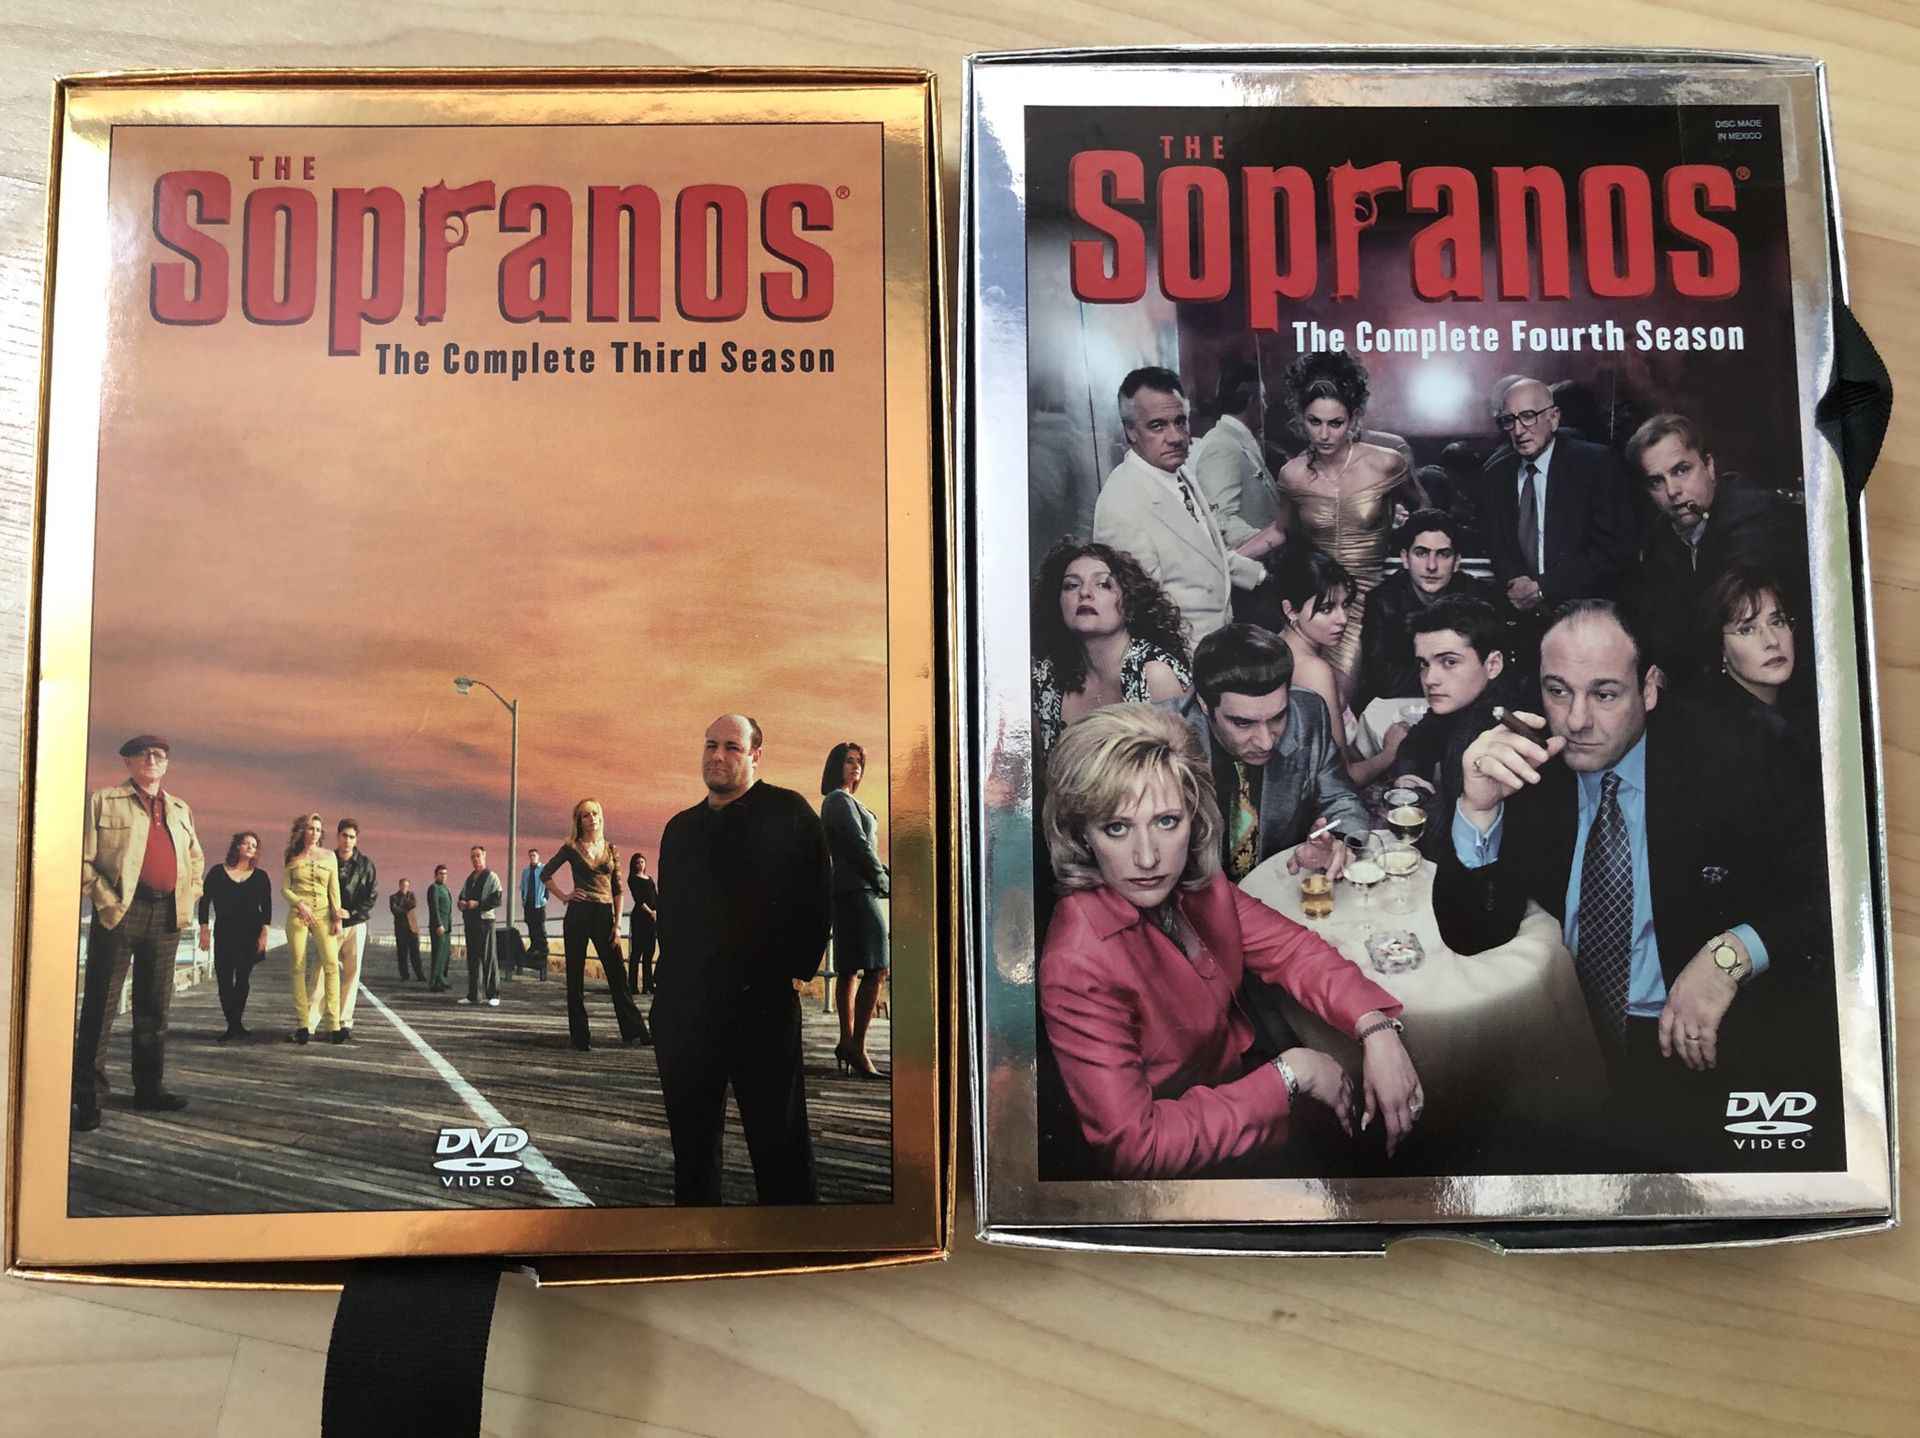 Sopranos Seasons 3 & 4 DVD sets